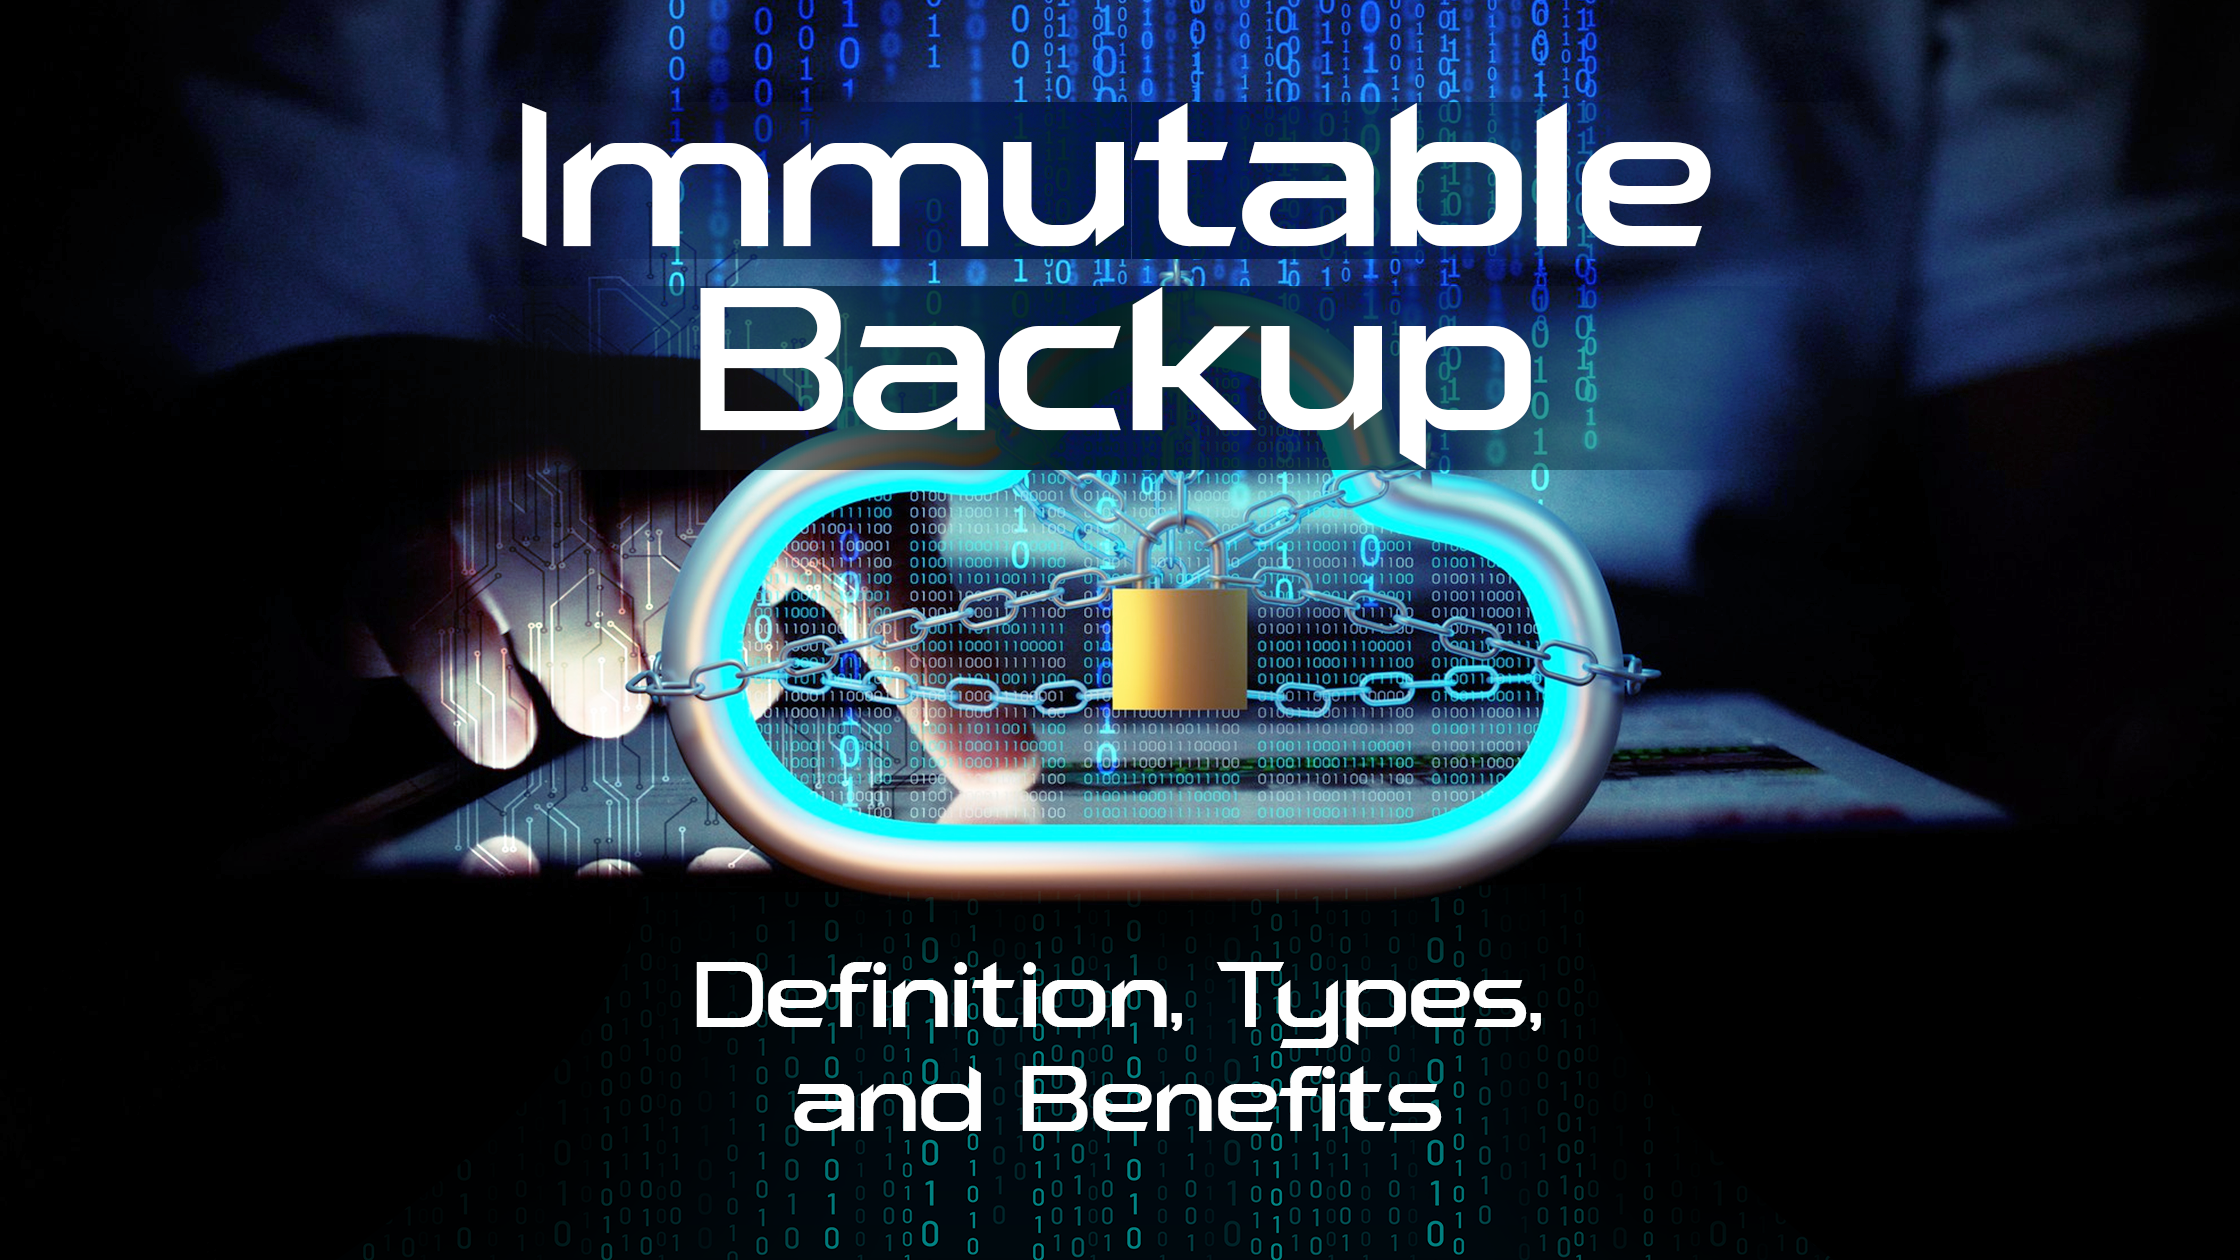 Immutable Backup